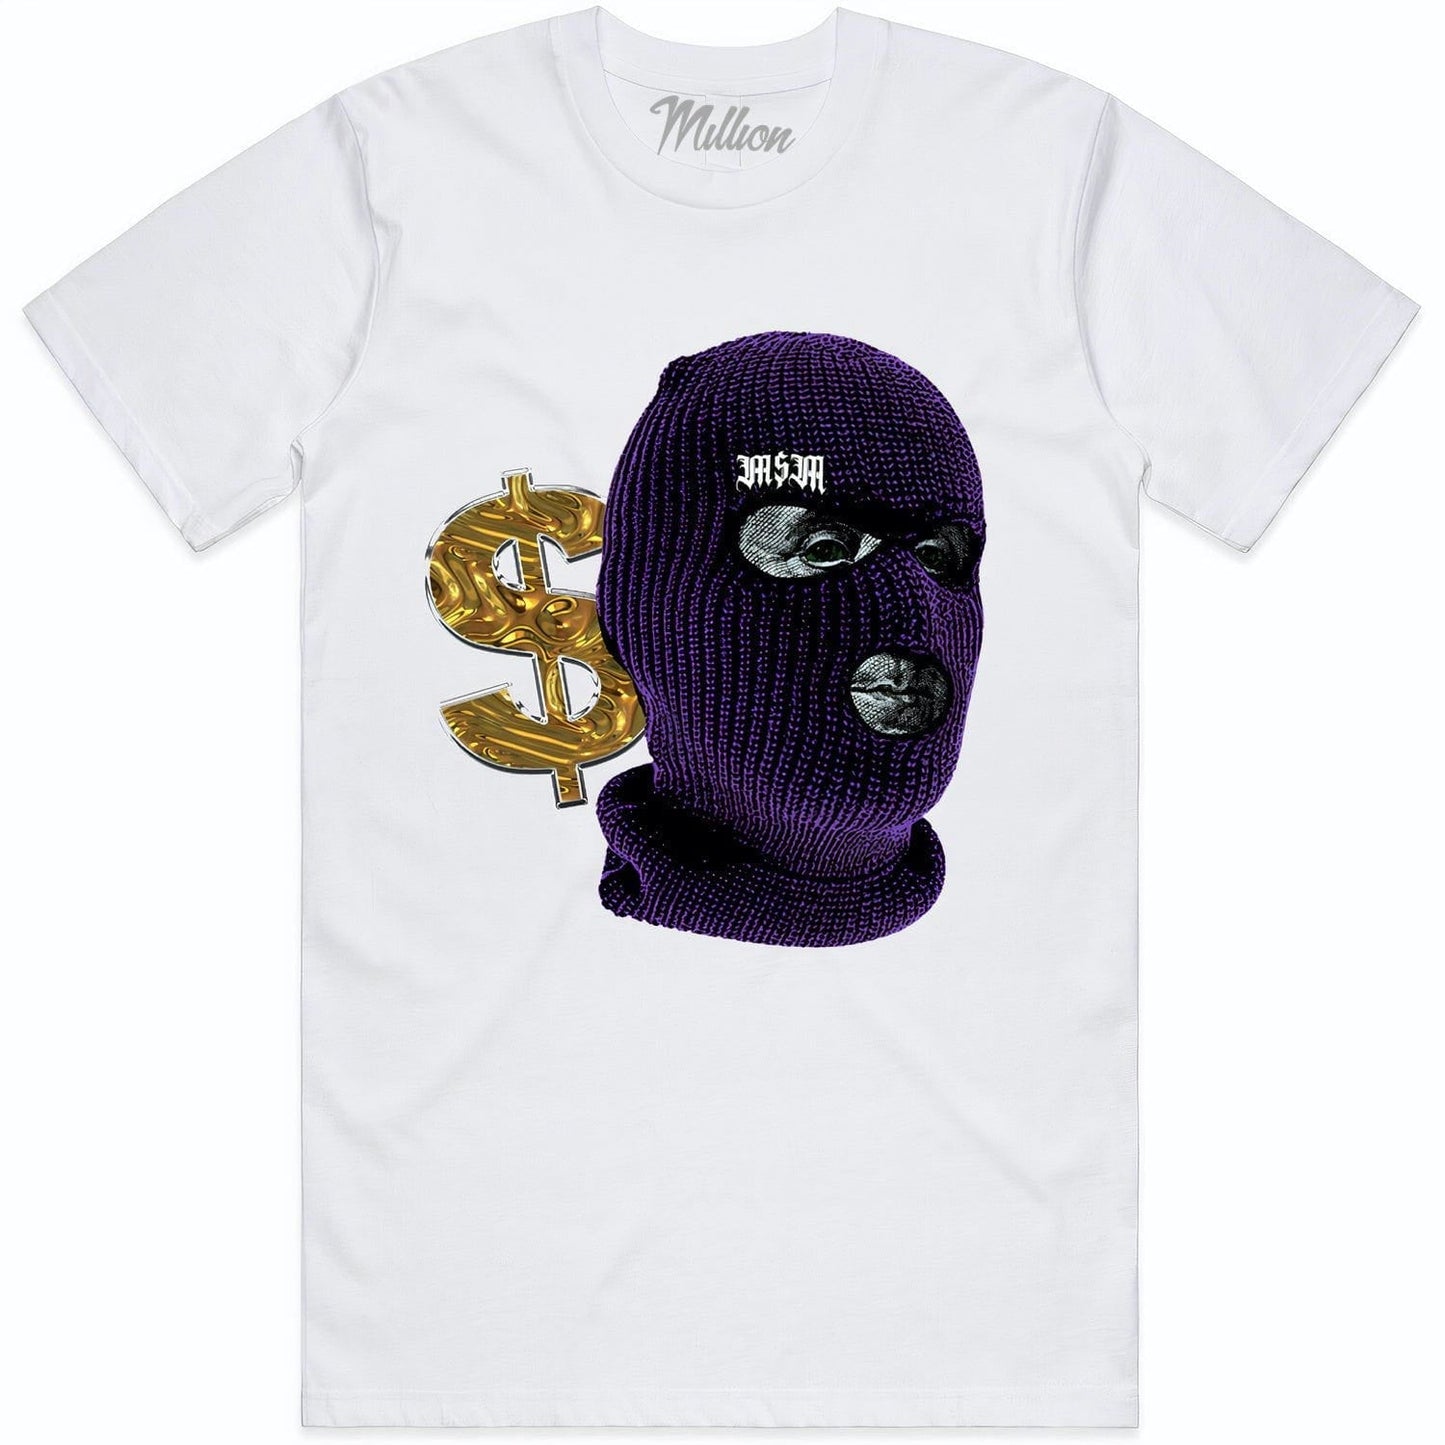 Air Jordan 12 Field Purple - Shirts to Match - Sneaker Tees - Ski Mask